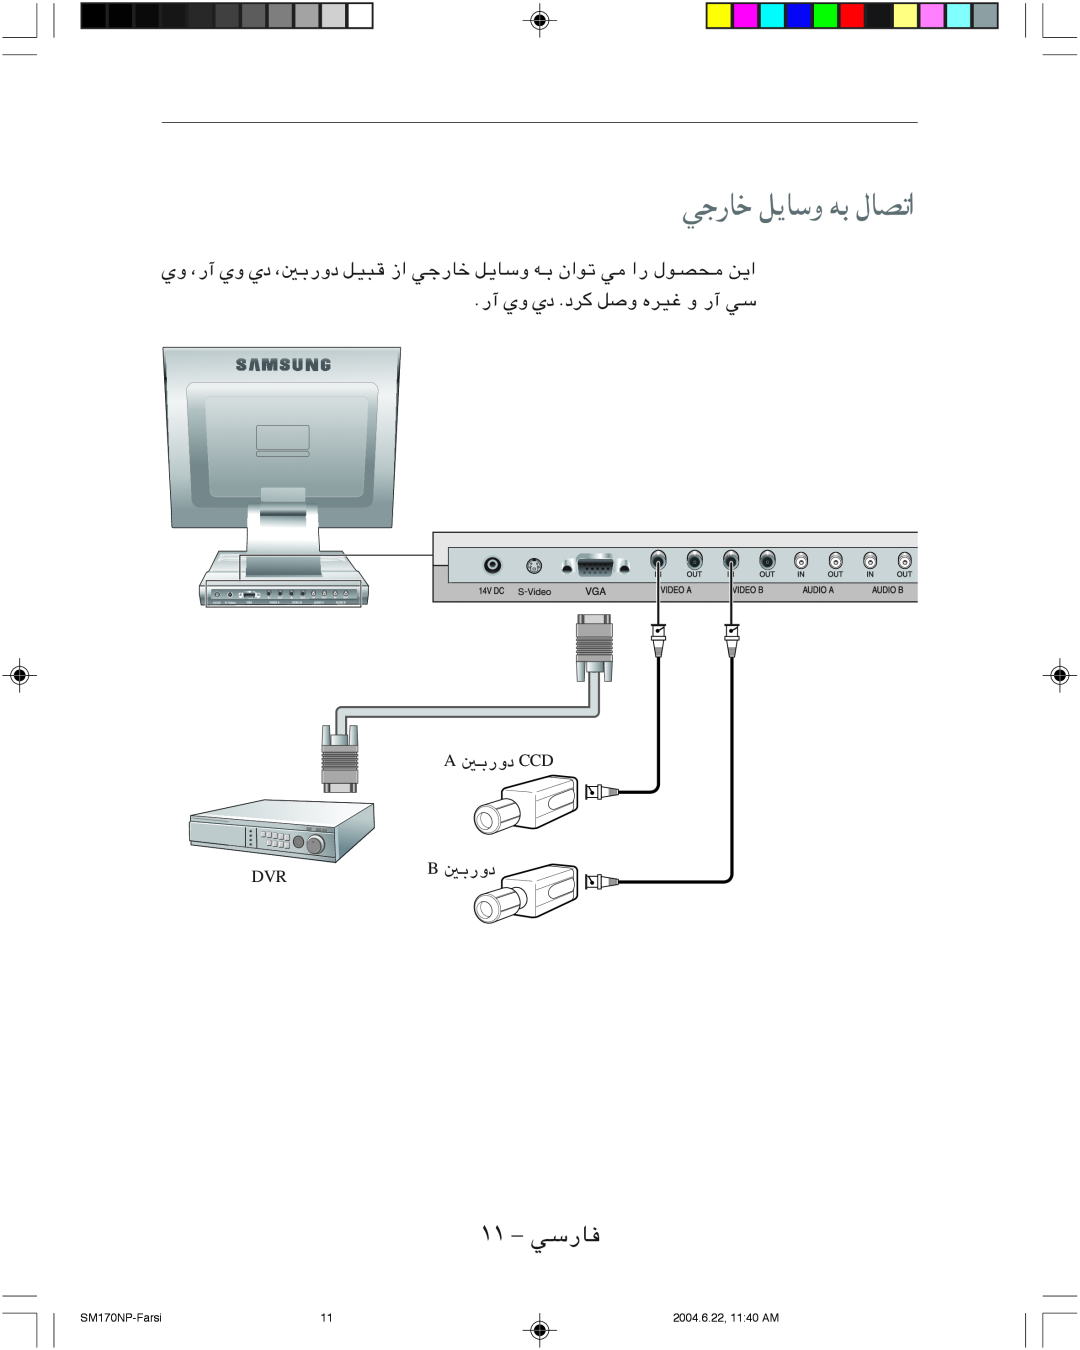 Samsung SMT-170P manual ﻲﺟرﺎﺧ ﻞﻳﺎﺳو ﻪﺑ لﺎﺼﺗا, ۱۱ - ﻲﺳرﺎﻓ, SM170NP-Farsi, 2004.6.22, 1140 AM 